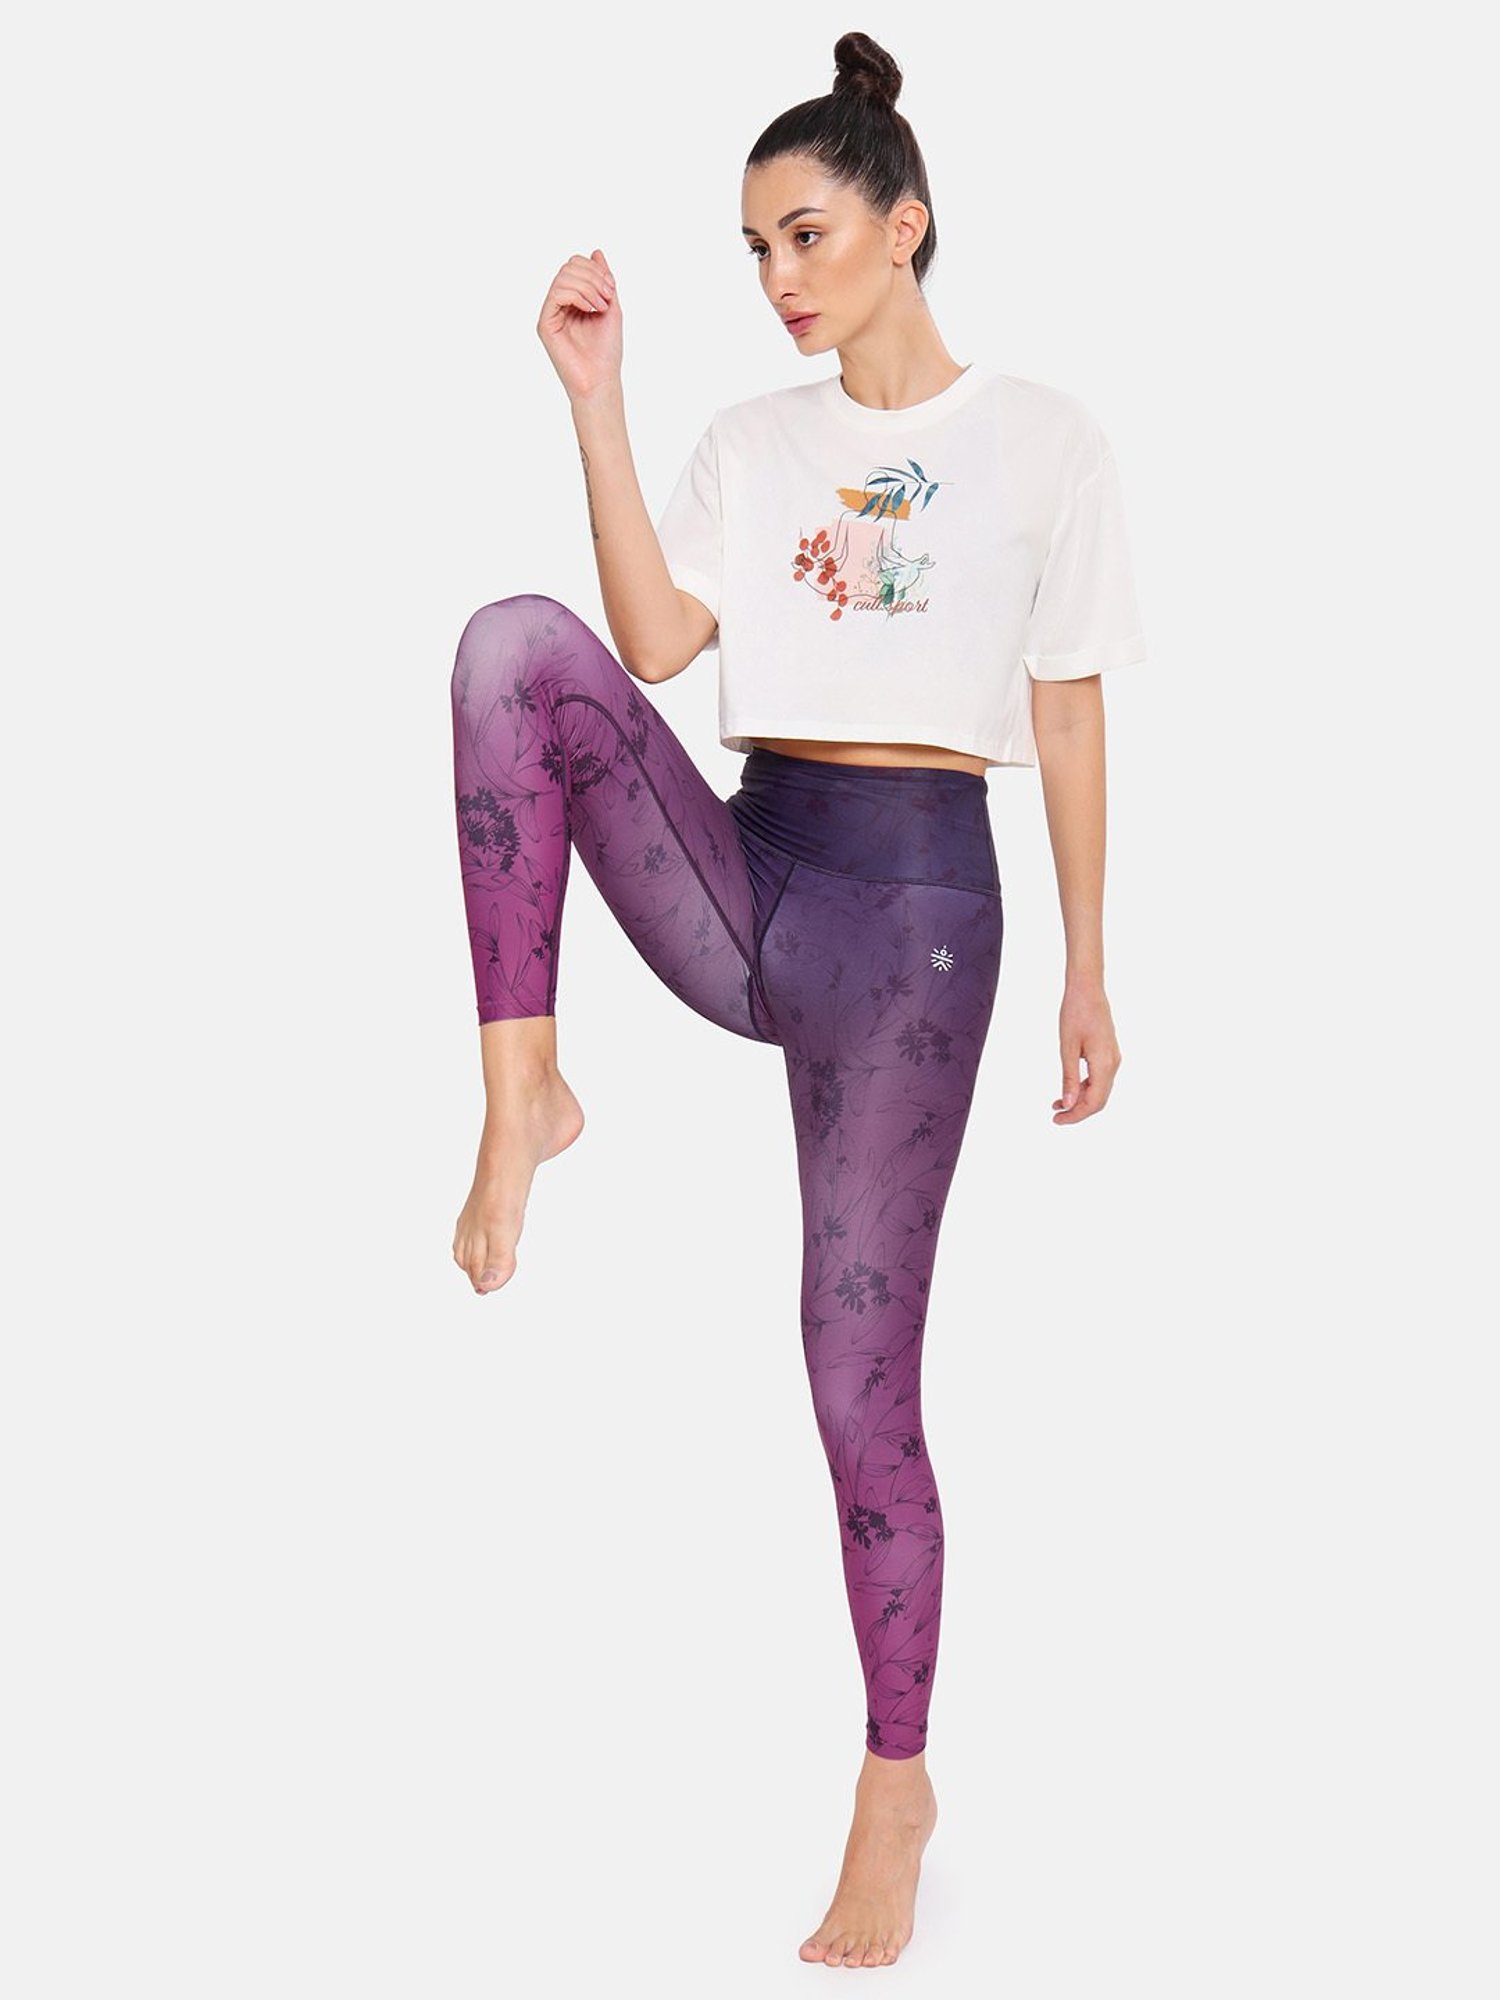 Buy Lavany Women's Mid Waist Elastic Printed Pant (Purple, S) at Amazon.in